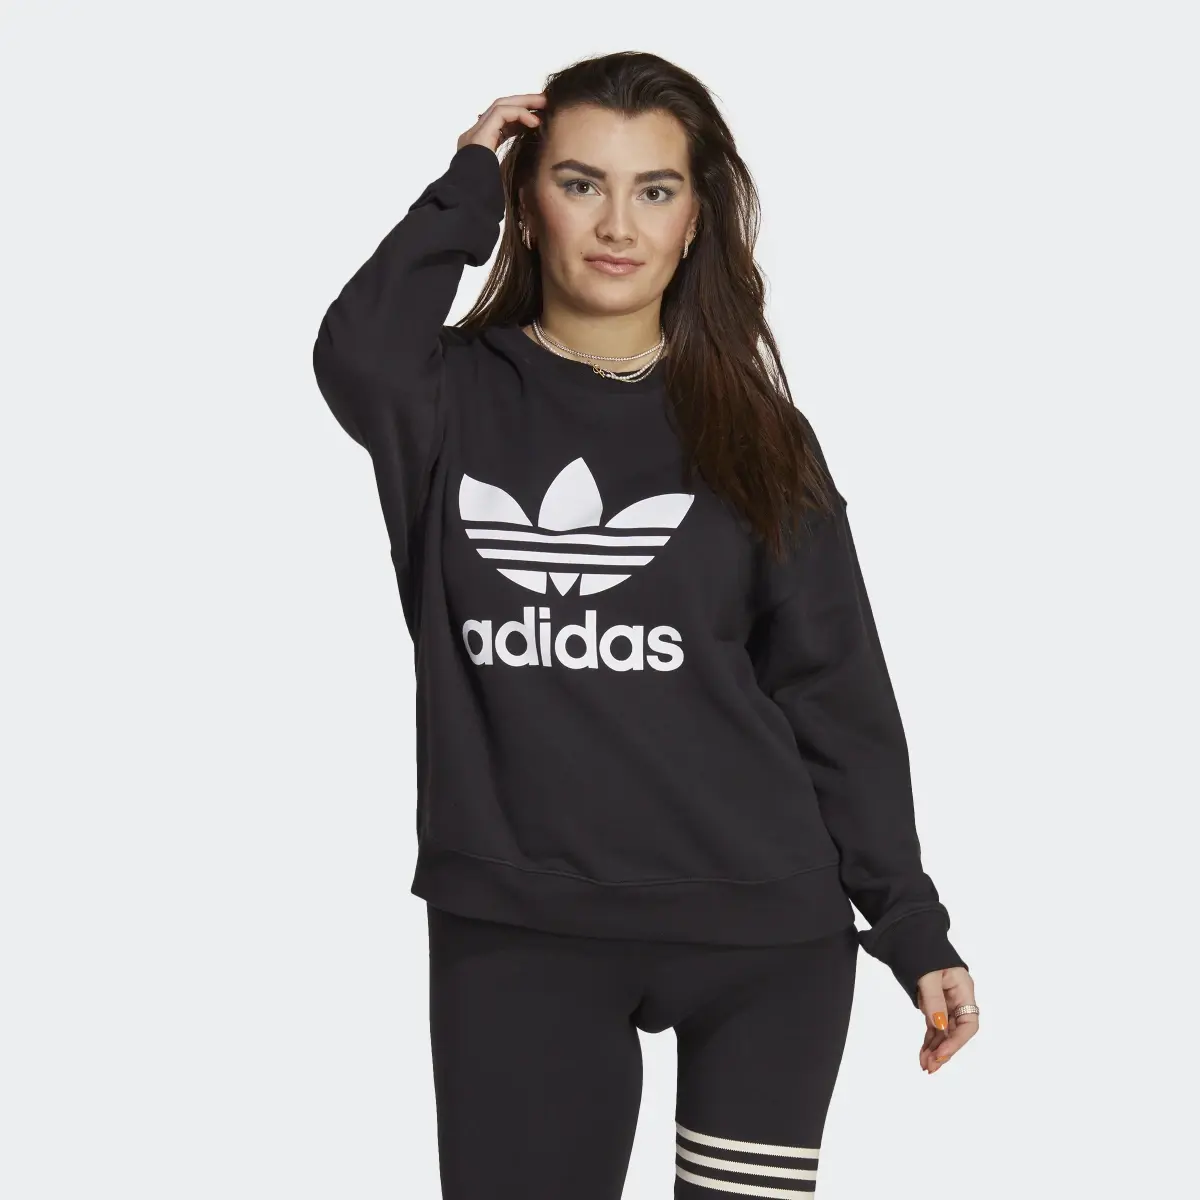 Adidas Trefoil Sweatshirt. 2